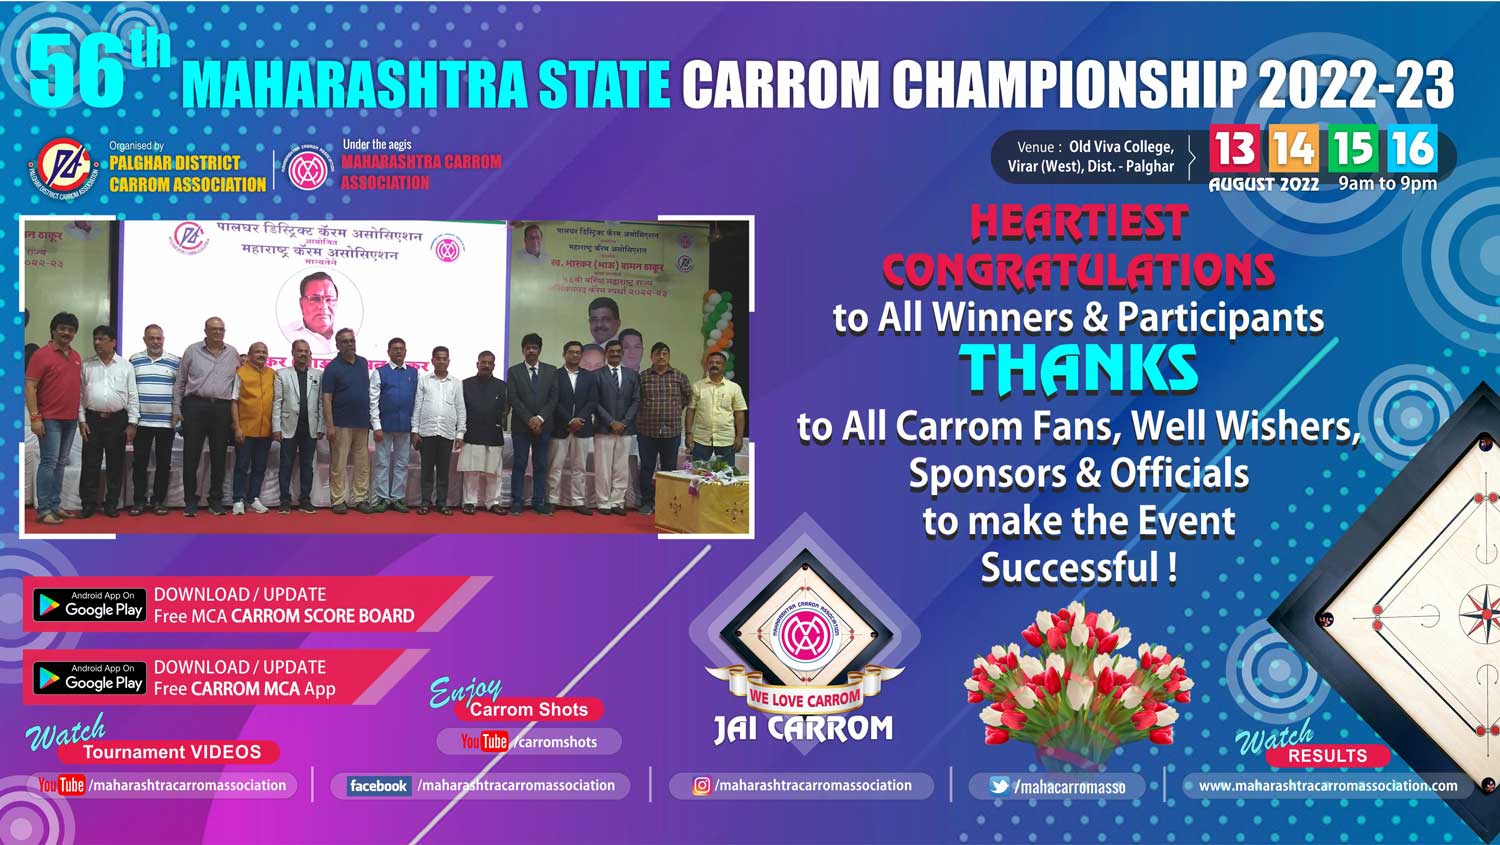 56th Maharashtra State Carrom Championship 2022-23